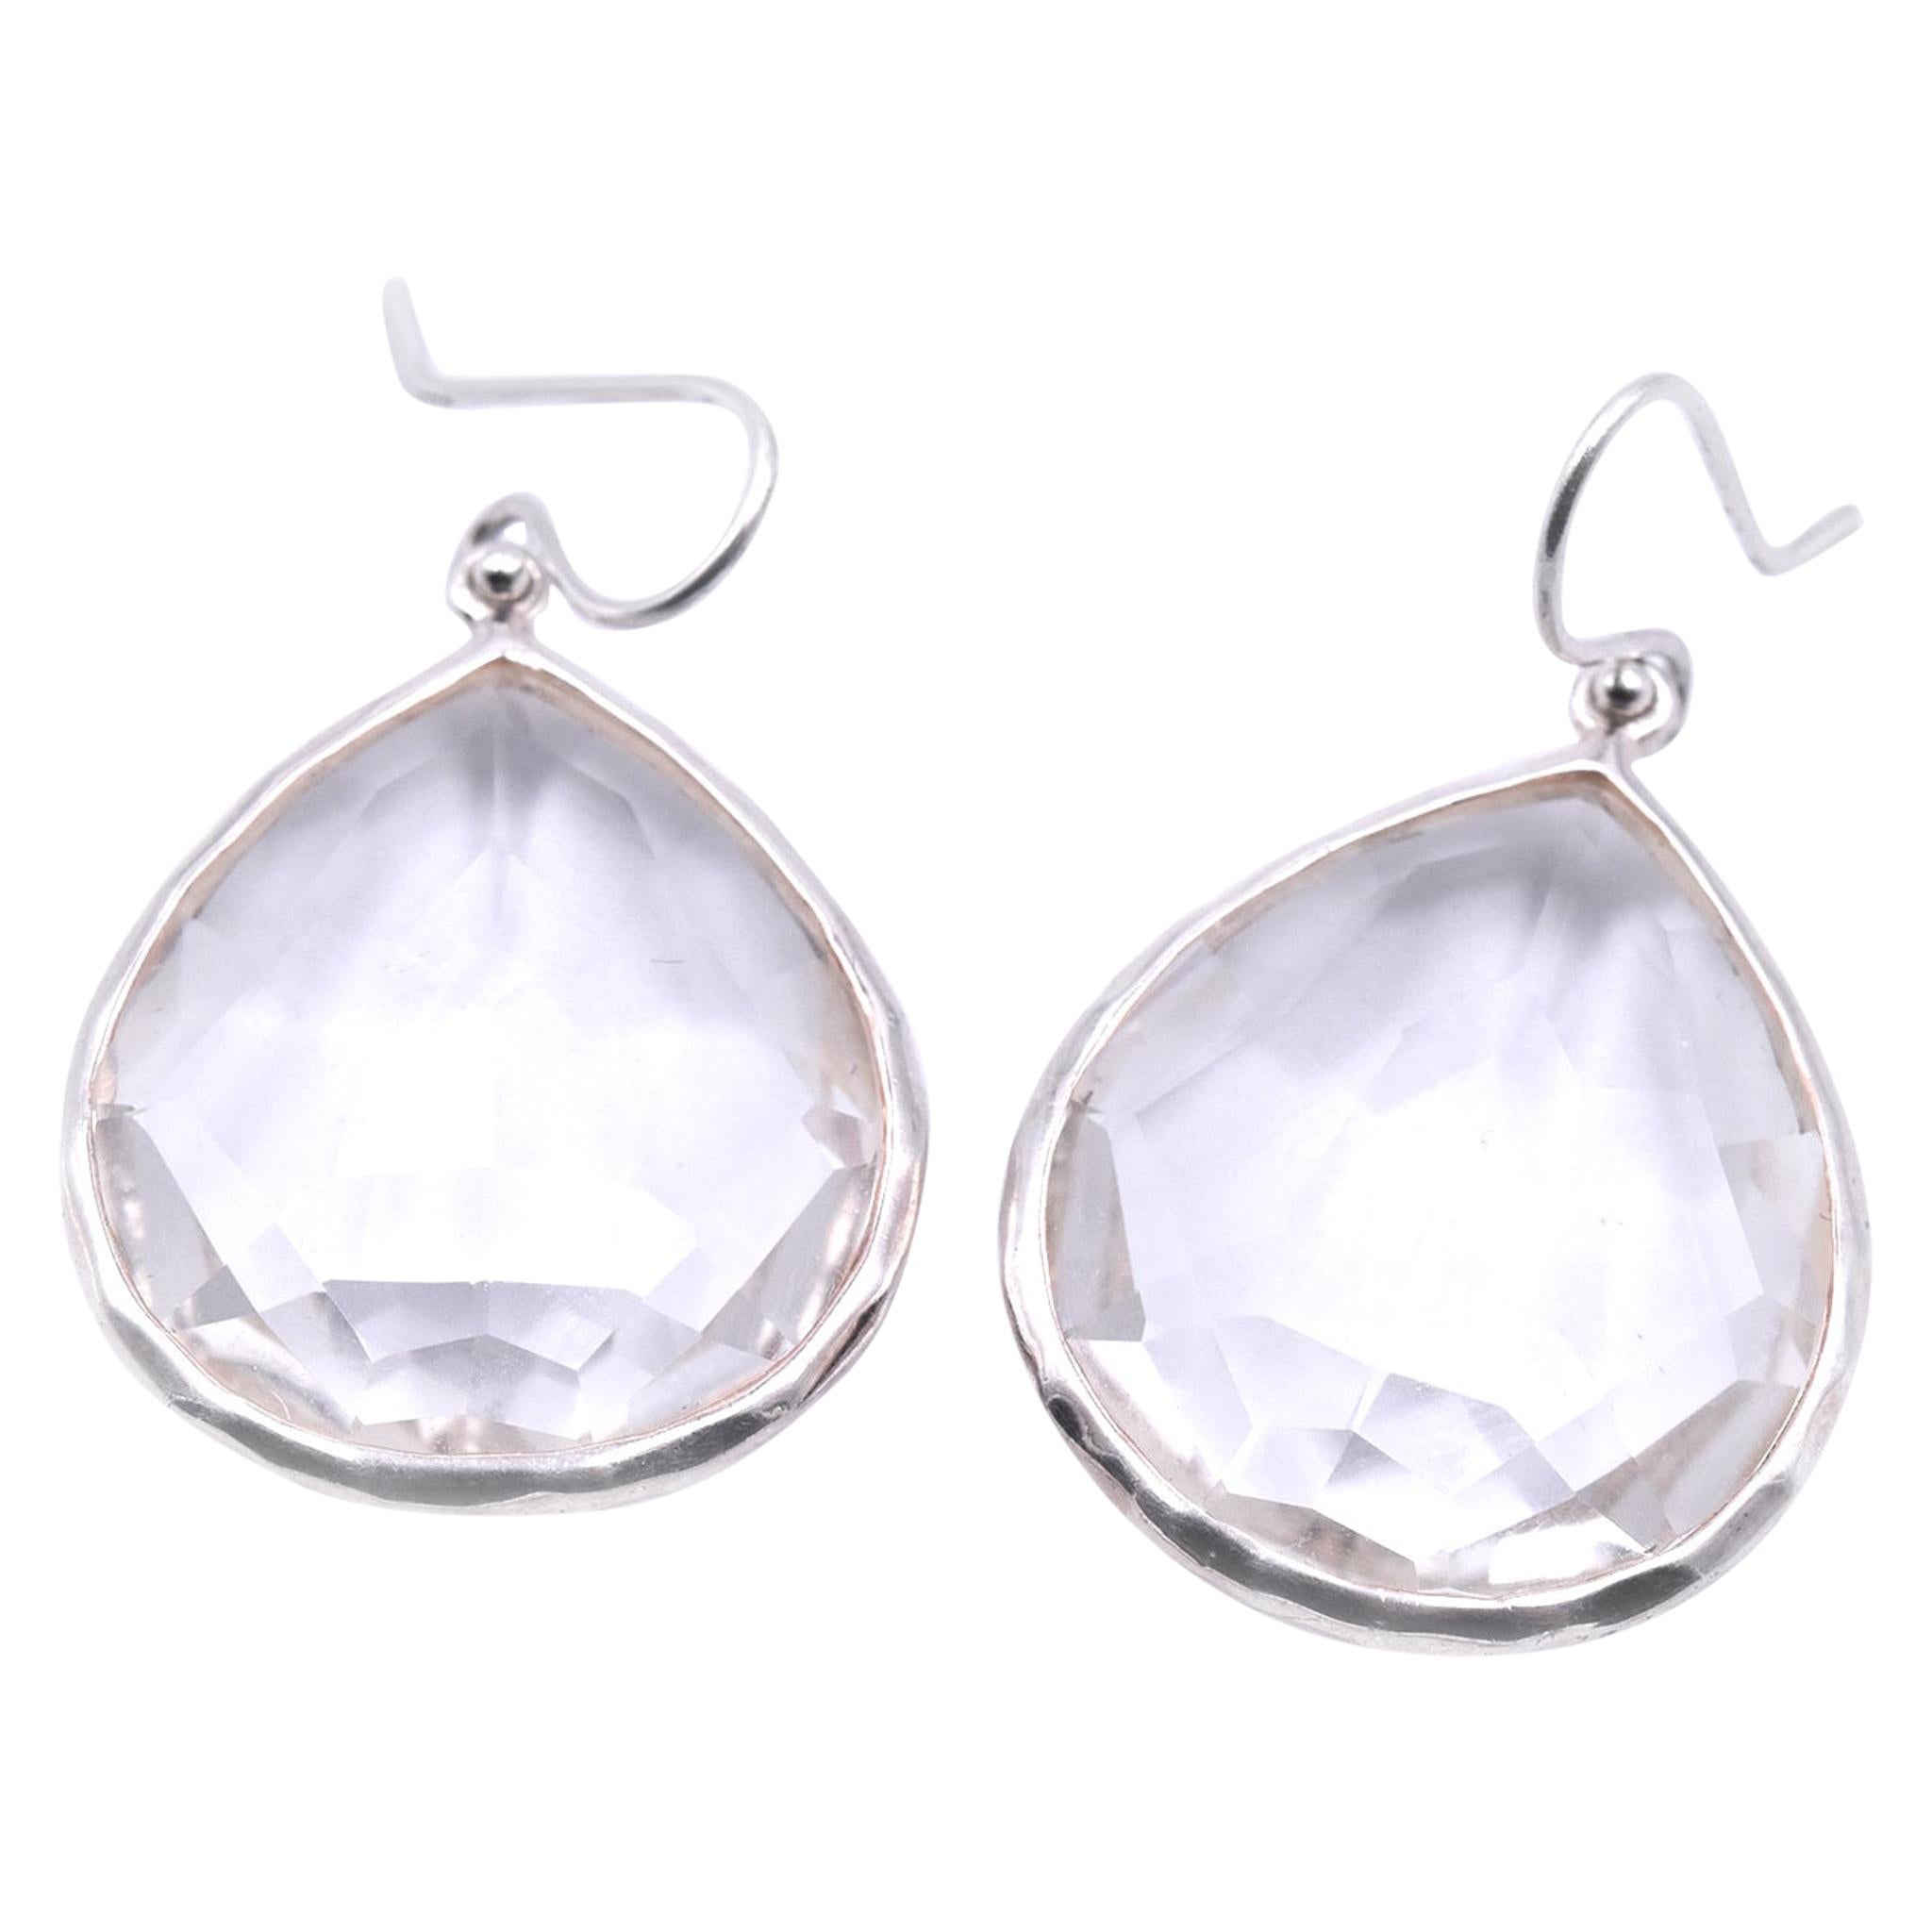 Ippolita Sterling Silver Rock Candy Earrings with Clear Rock Crystal Tear Drop